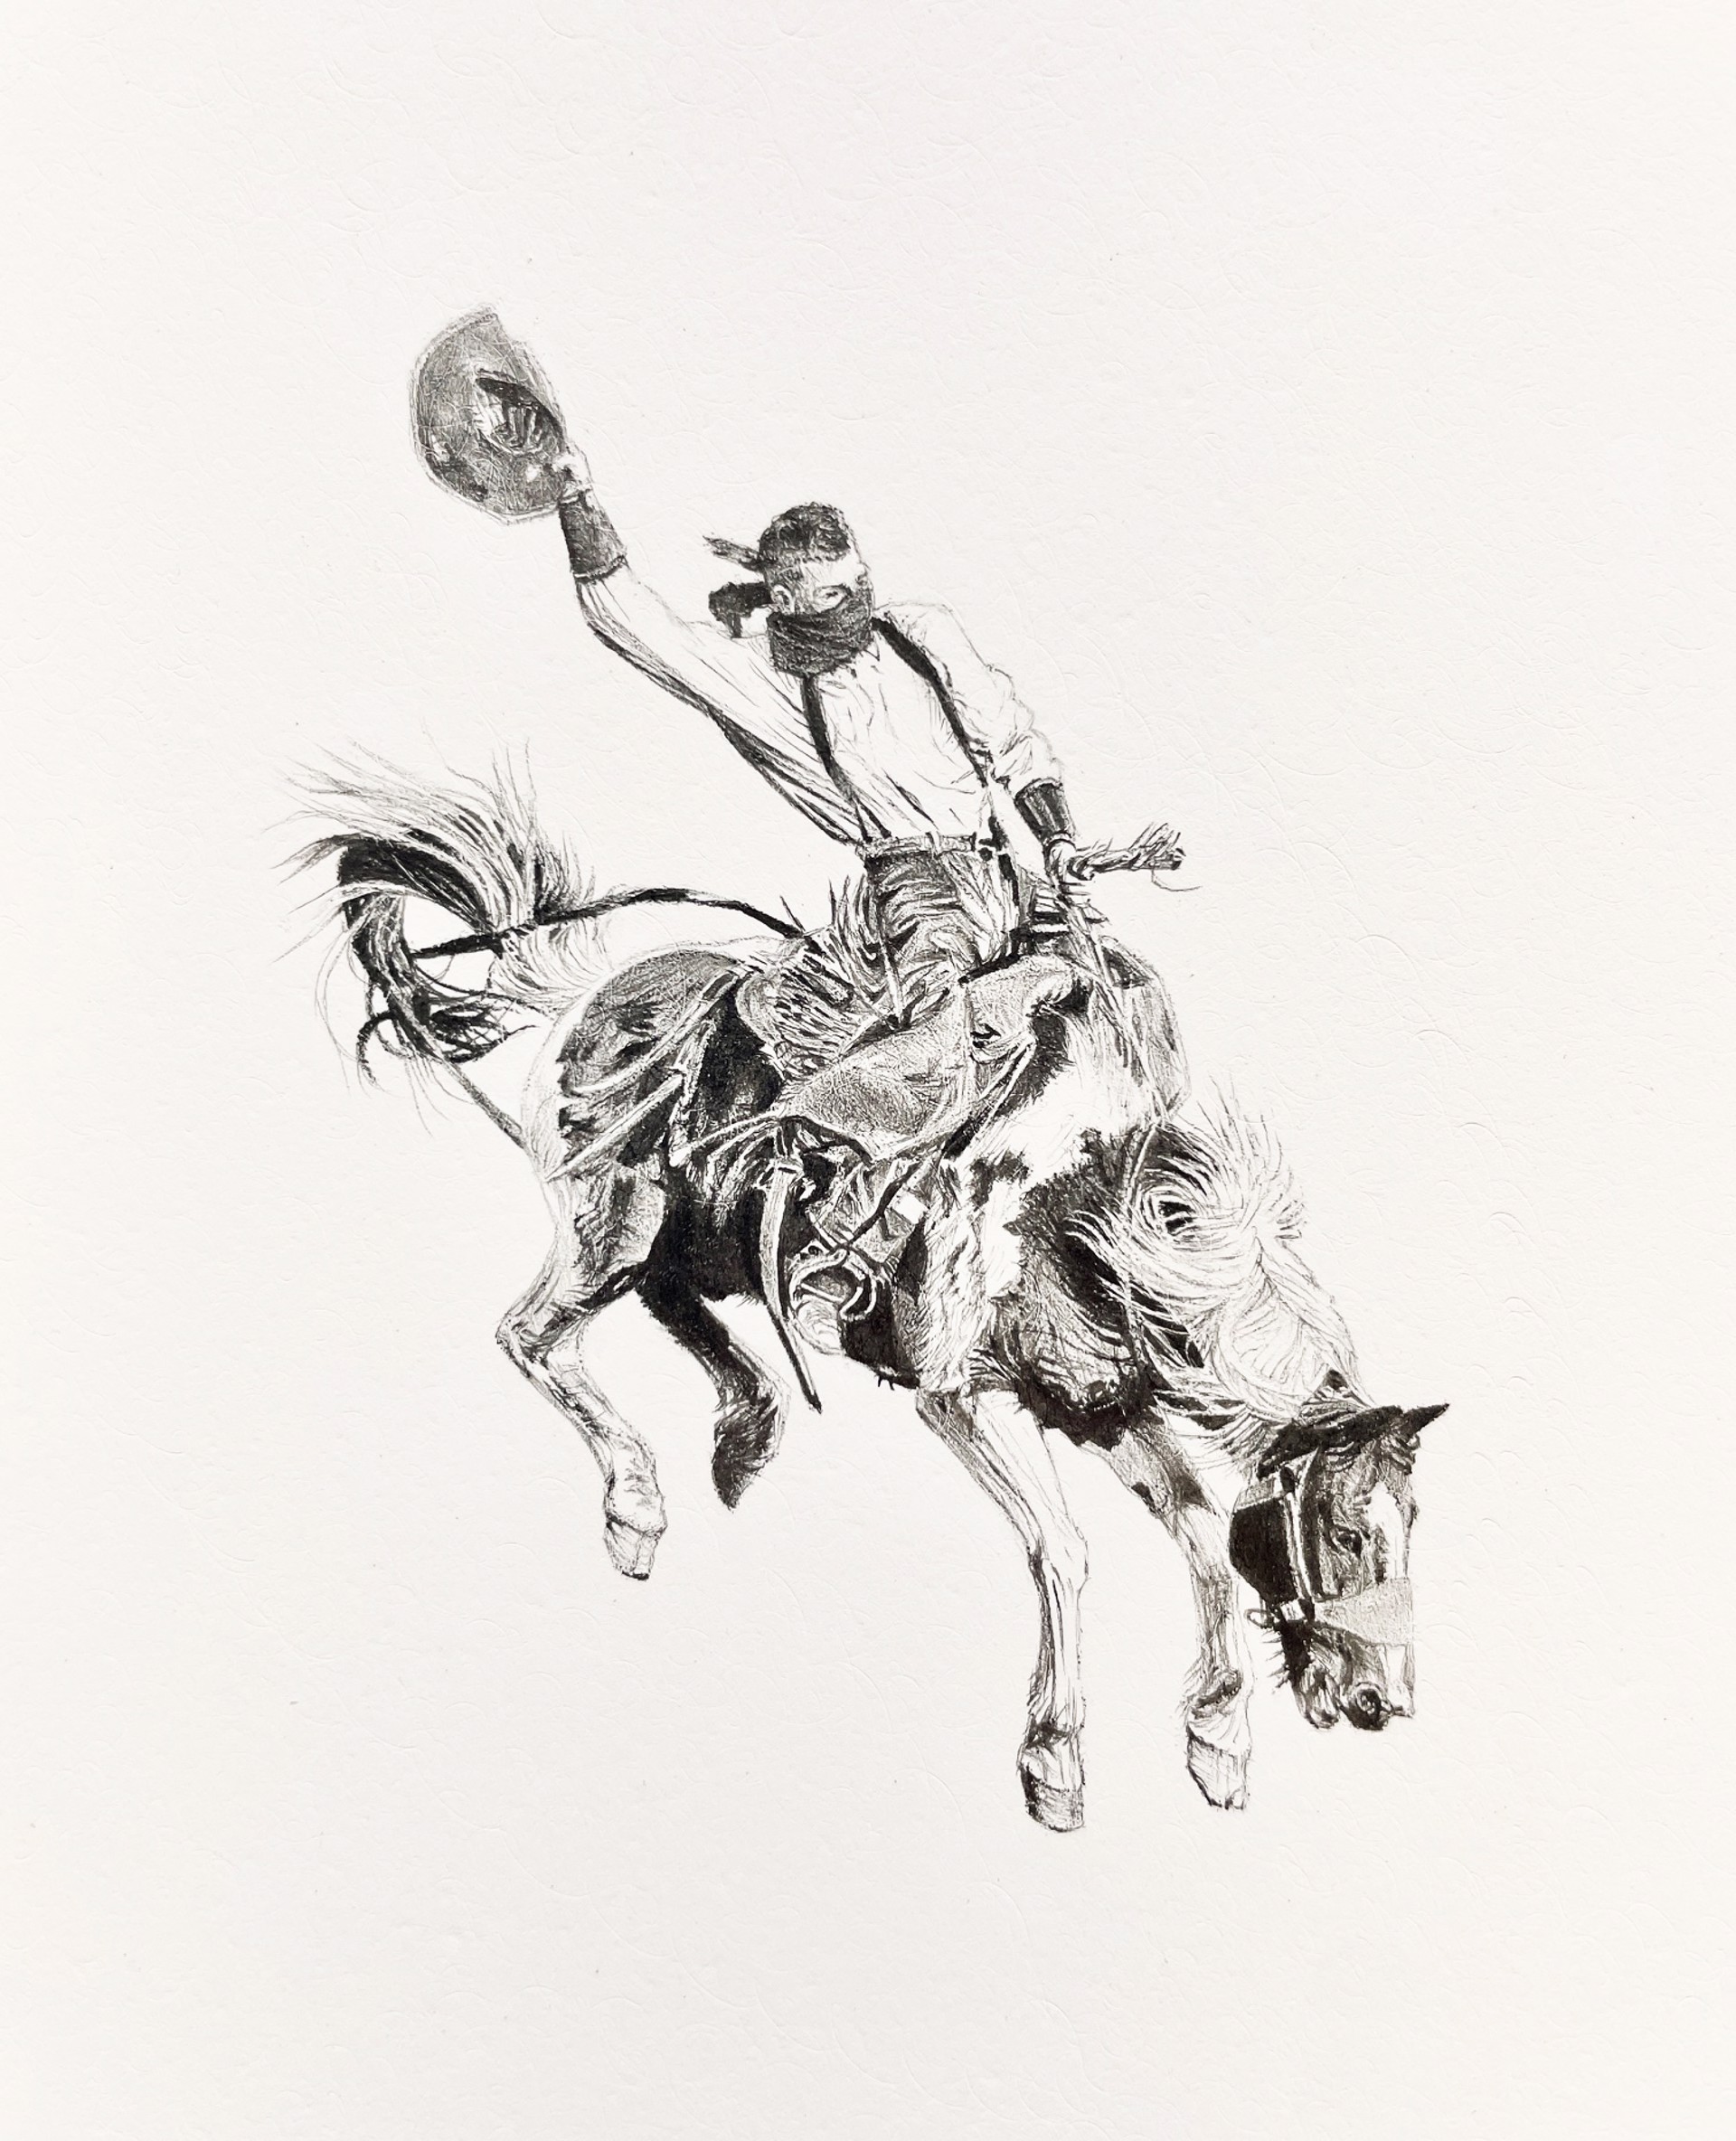 Untitled (Bronc Rider)#6464 by Clayton Porter